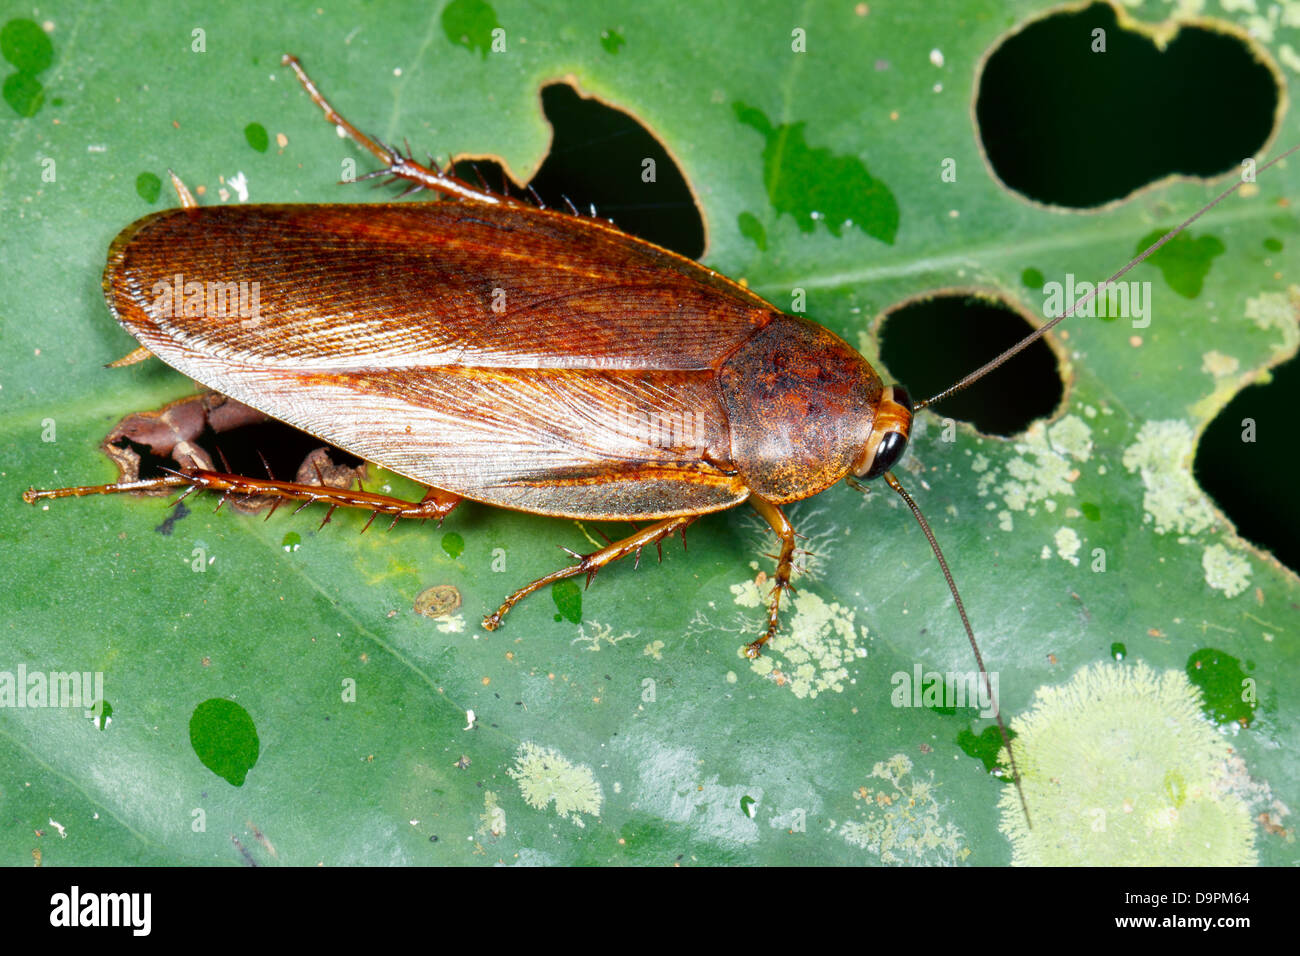 Cucaracha Immagini e Fotos Stock - Alamy